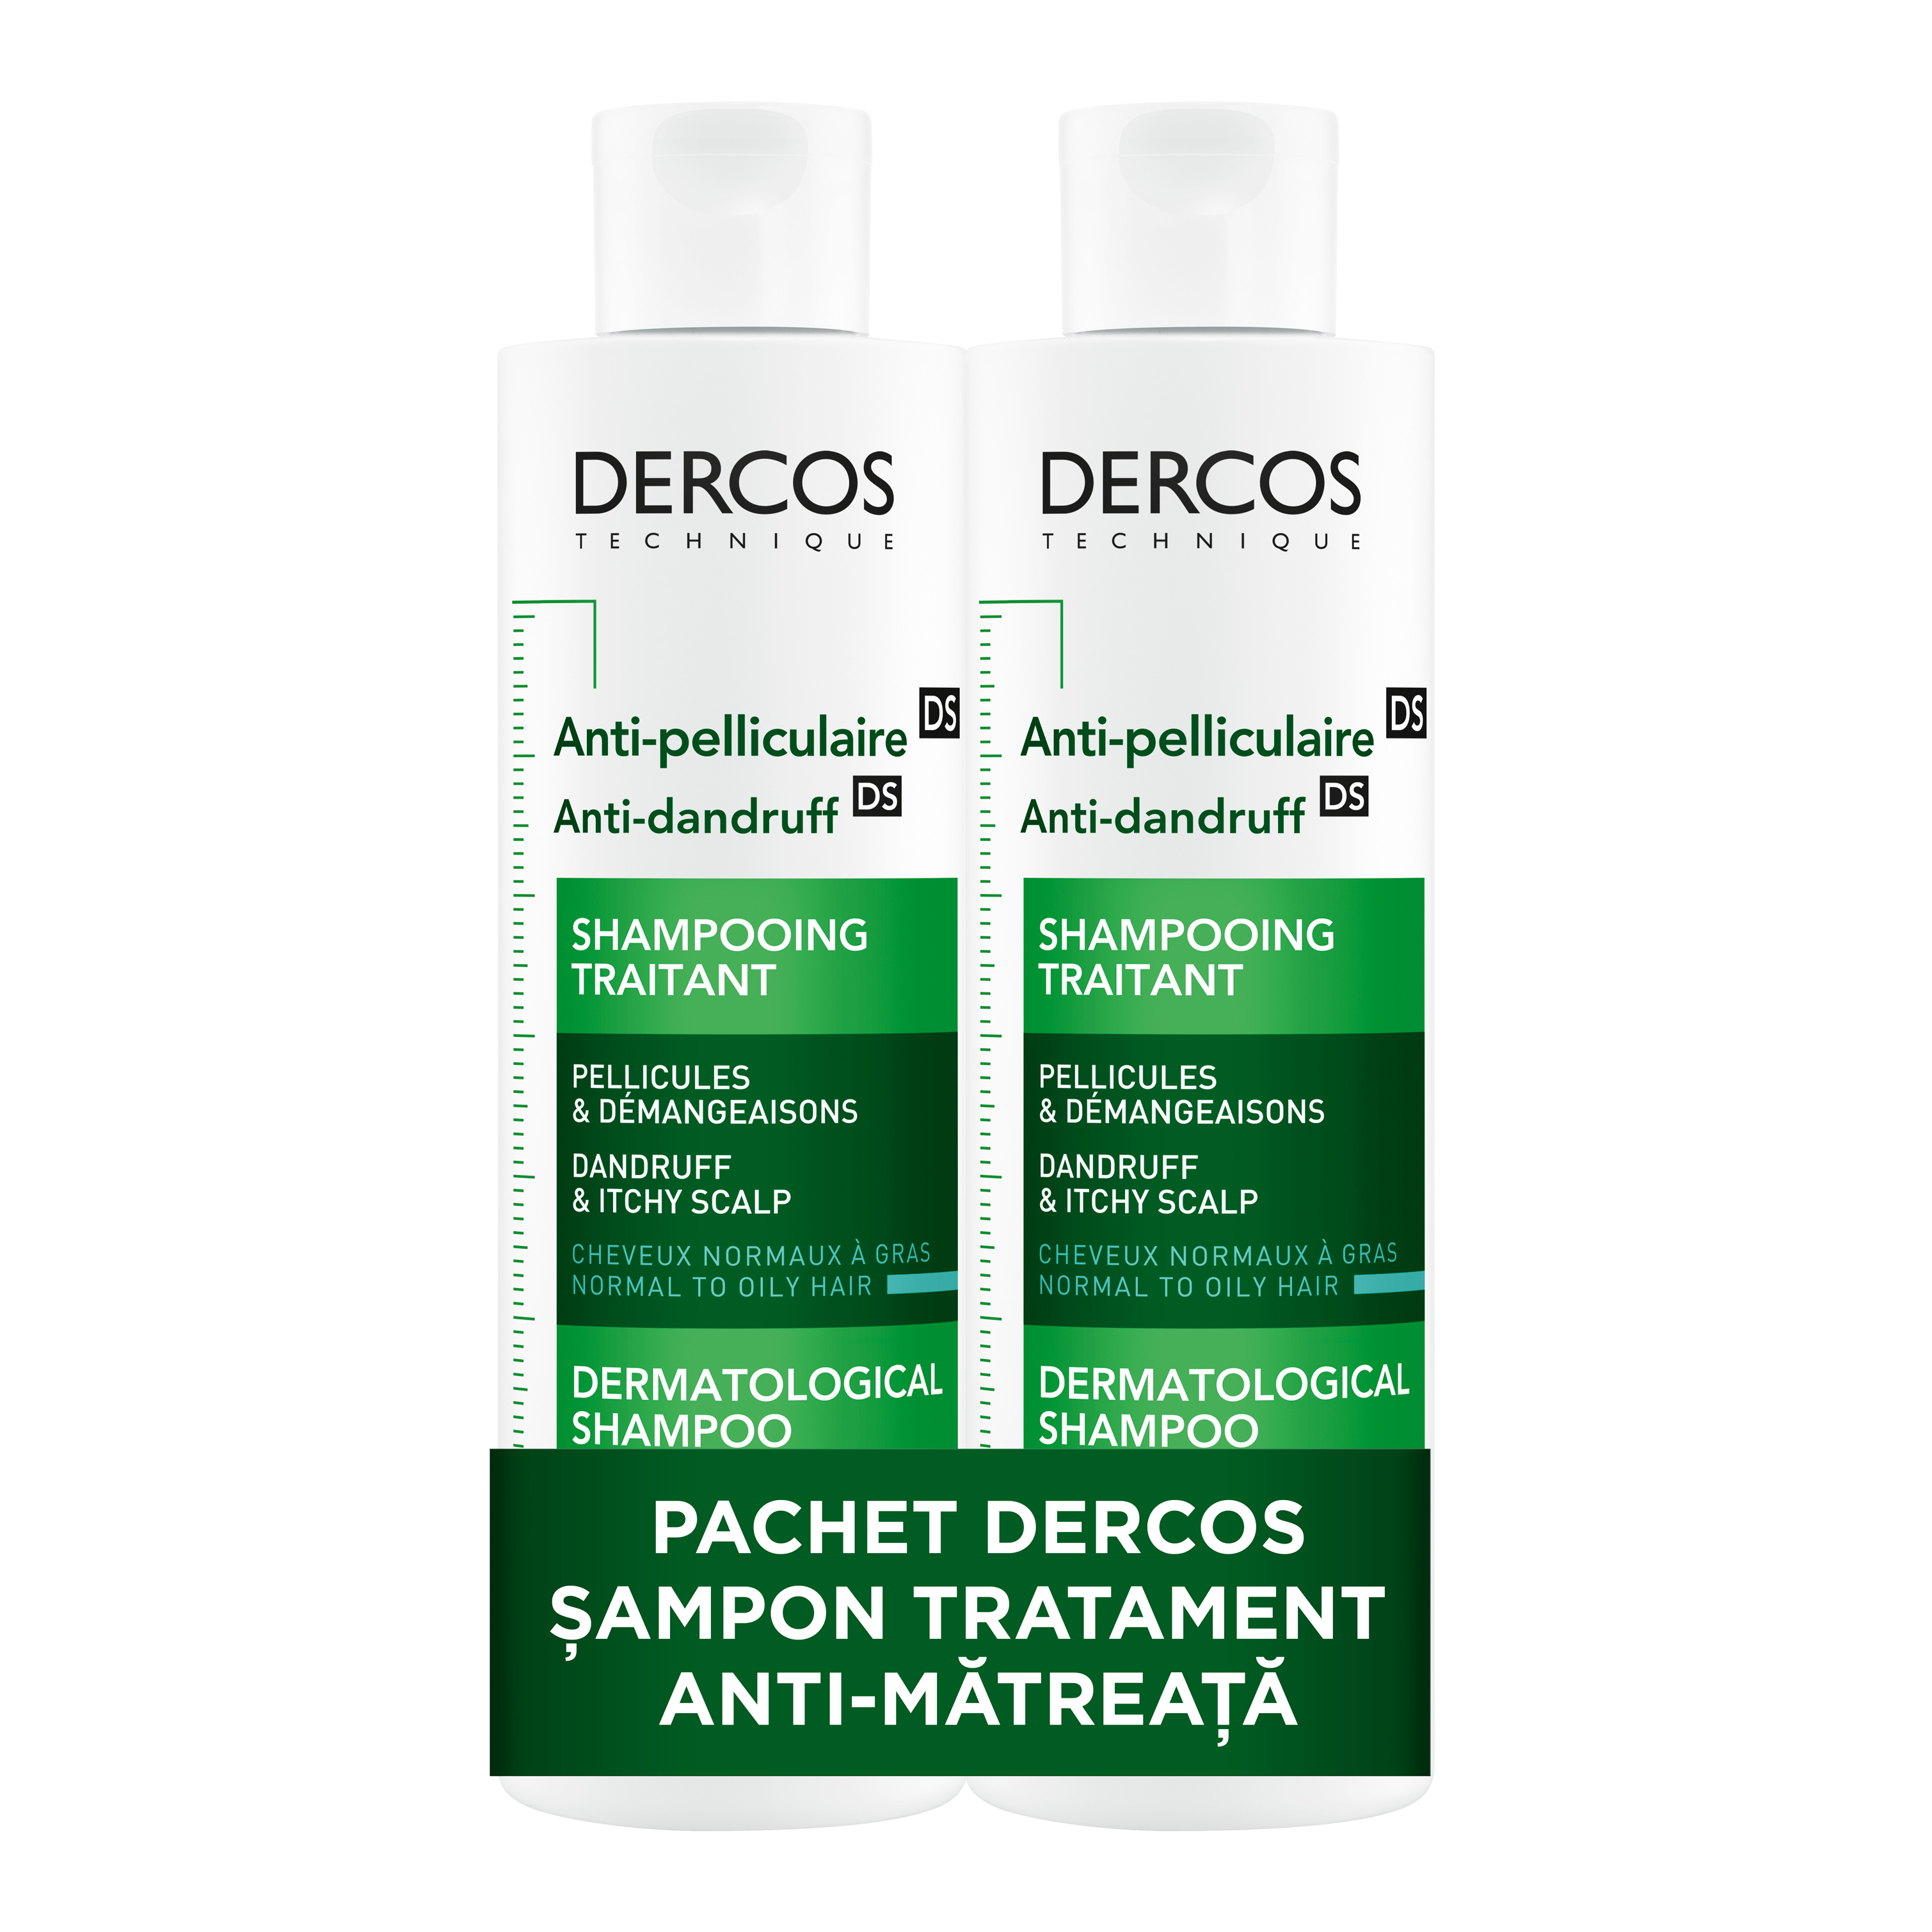 Oferta Pachet, Sampon tratament anti-matreata pentru scalp sensibil, Dercos, 2x200 ml, Vichy